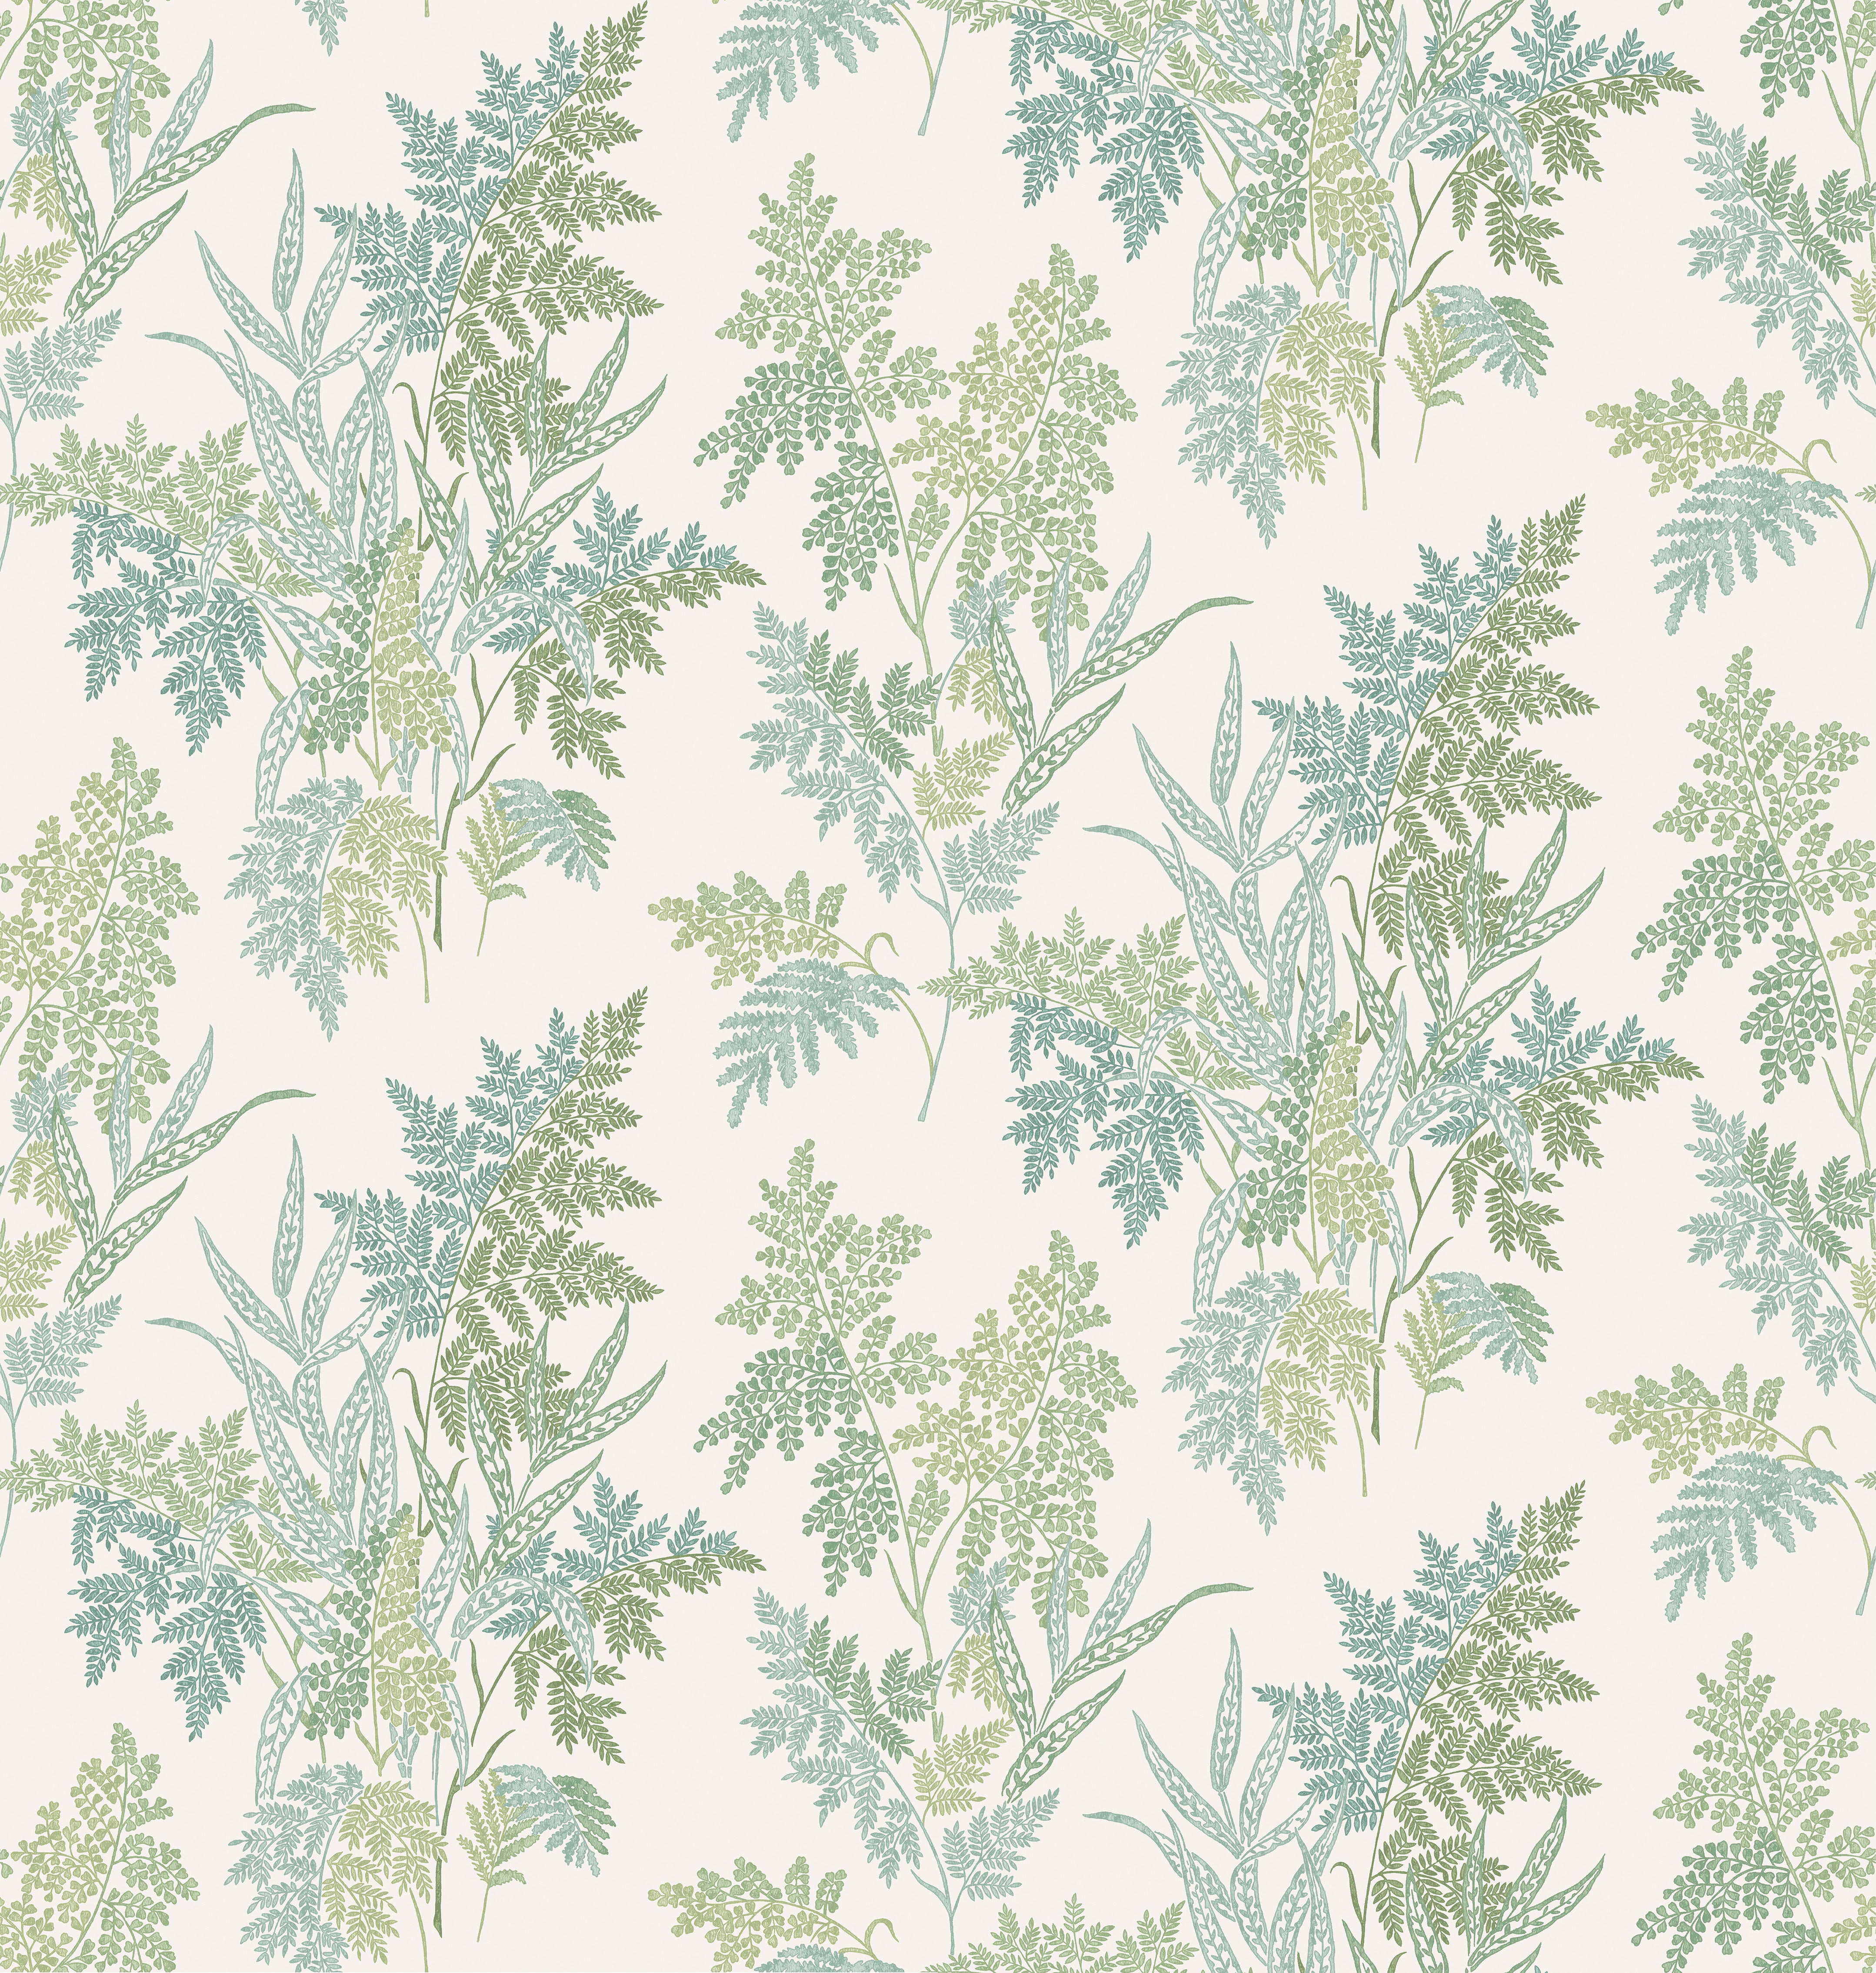 Nina Campbell Fabric - Dallimore Fern Craze Aqua/Eucalyptus NCF4533-03